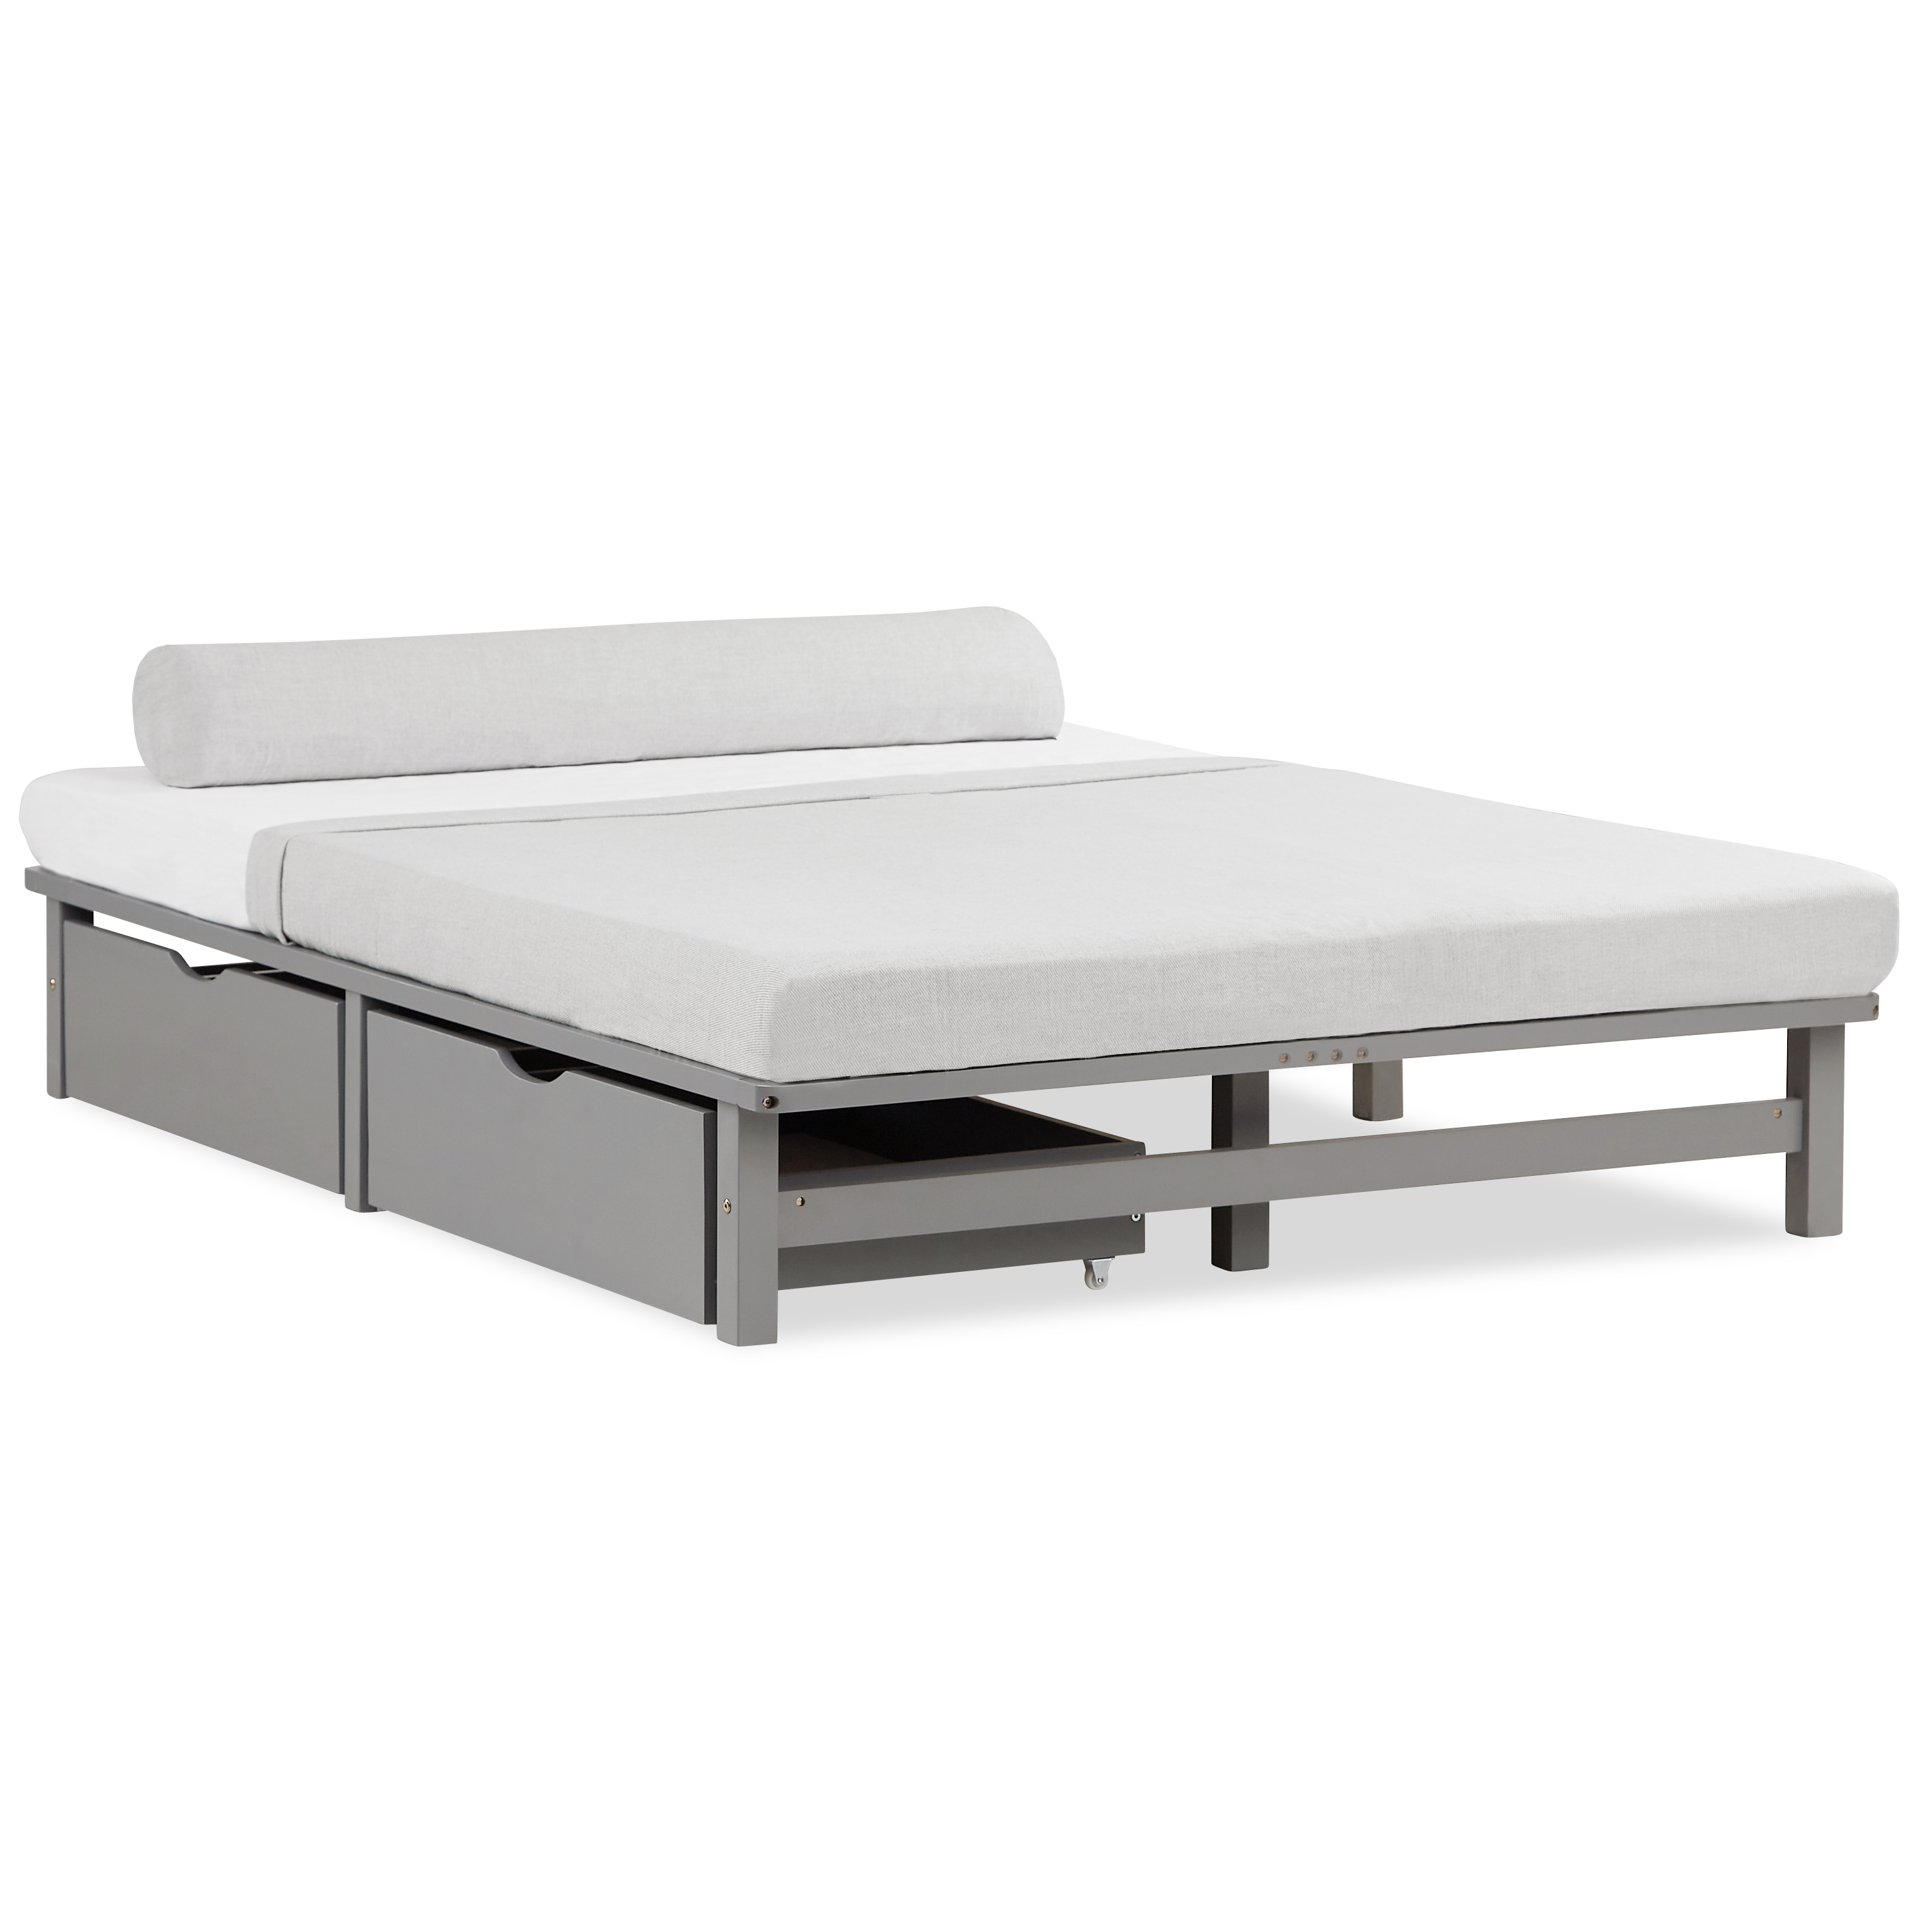 Pallet Bed 140x200 cm with Bed Drawer Set of 2 Slatts Solid Wooden Bed Pallet Furniture